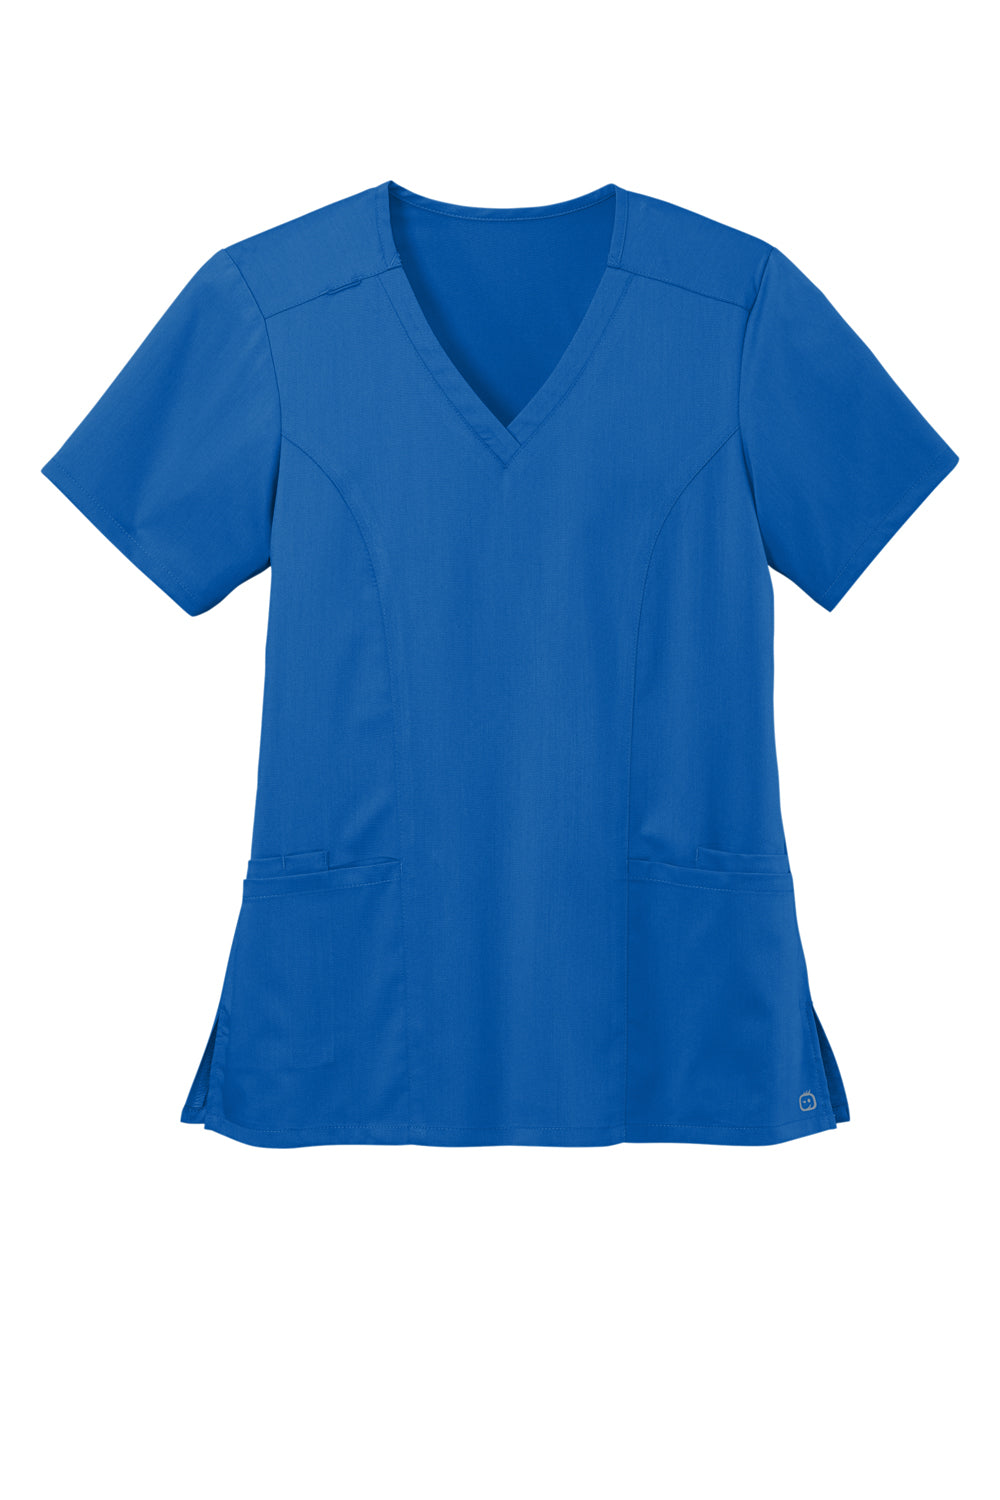 Wonderwink WW4168 Premiere Flex Short Sleeve V-Neck Shirt w/ Pockets Royal Blue Flat Front